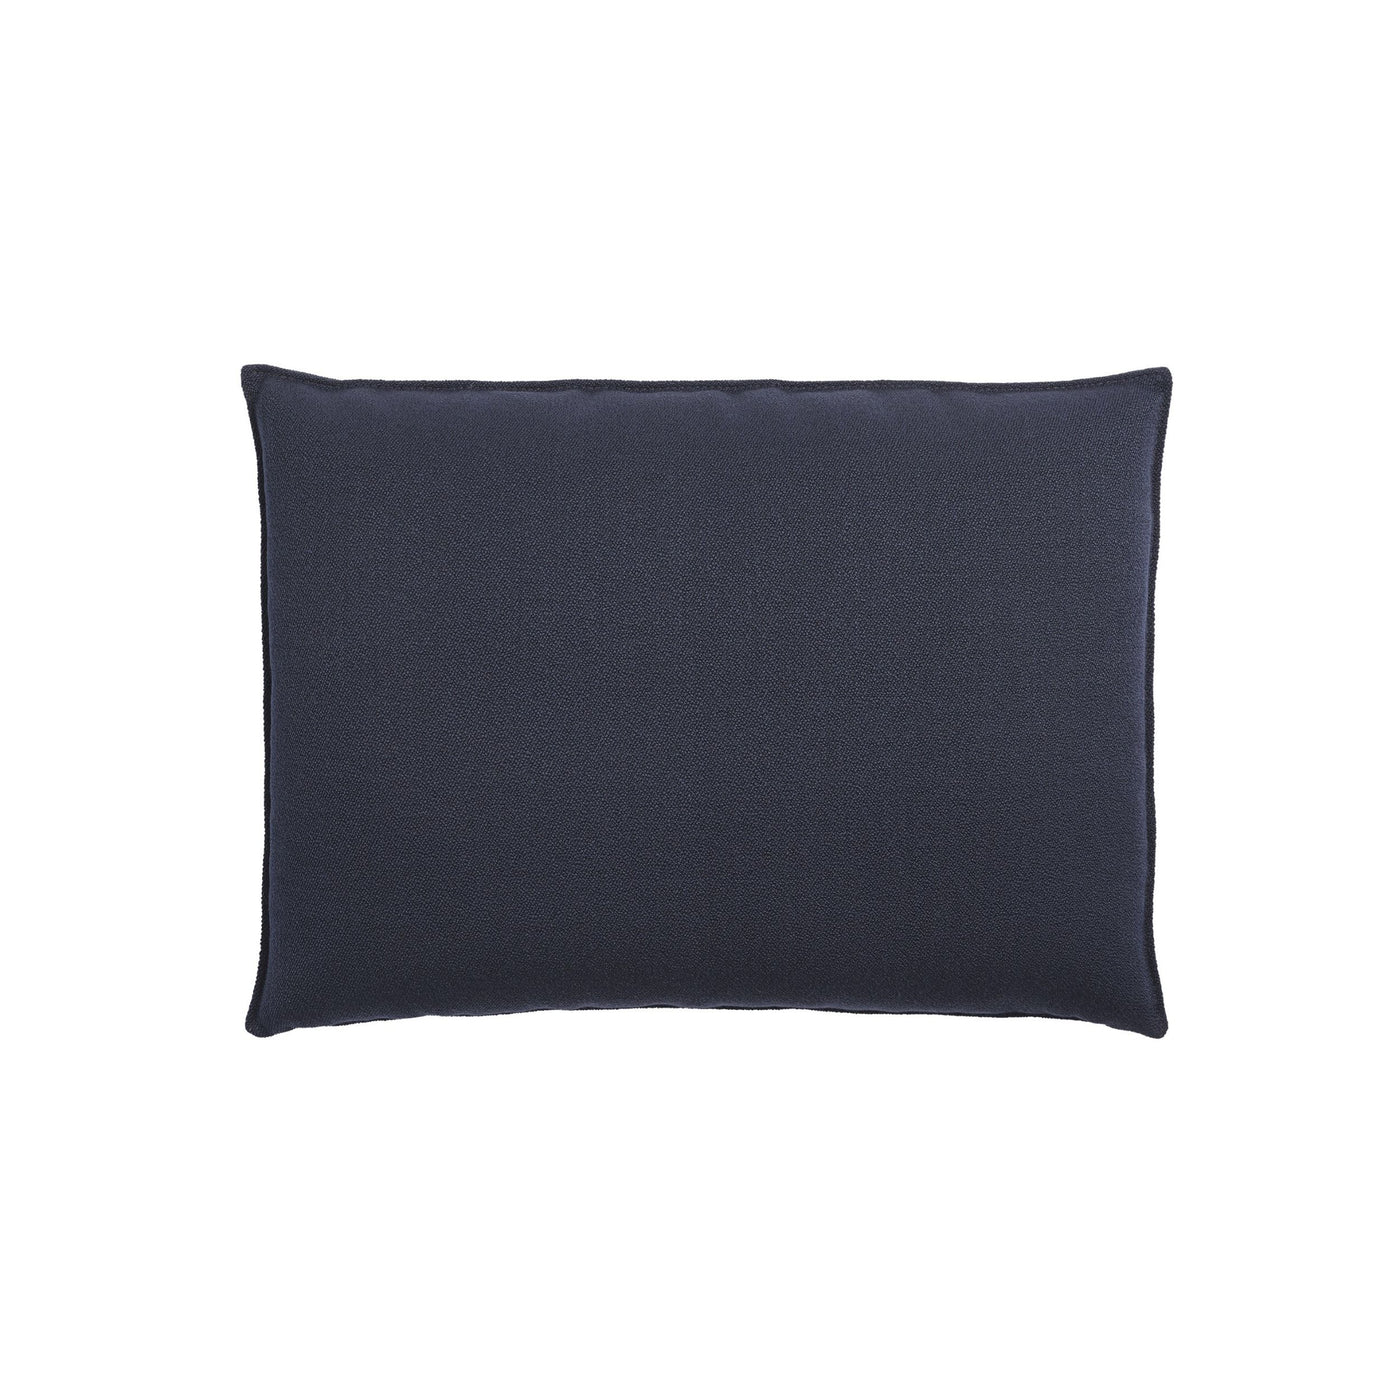 Muuto In Situ Modular Sofa cushion in Vidar 554 70x50cm. Made to order from someday designs.. #colour_vidar-554